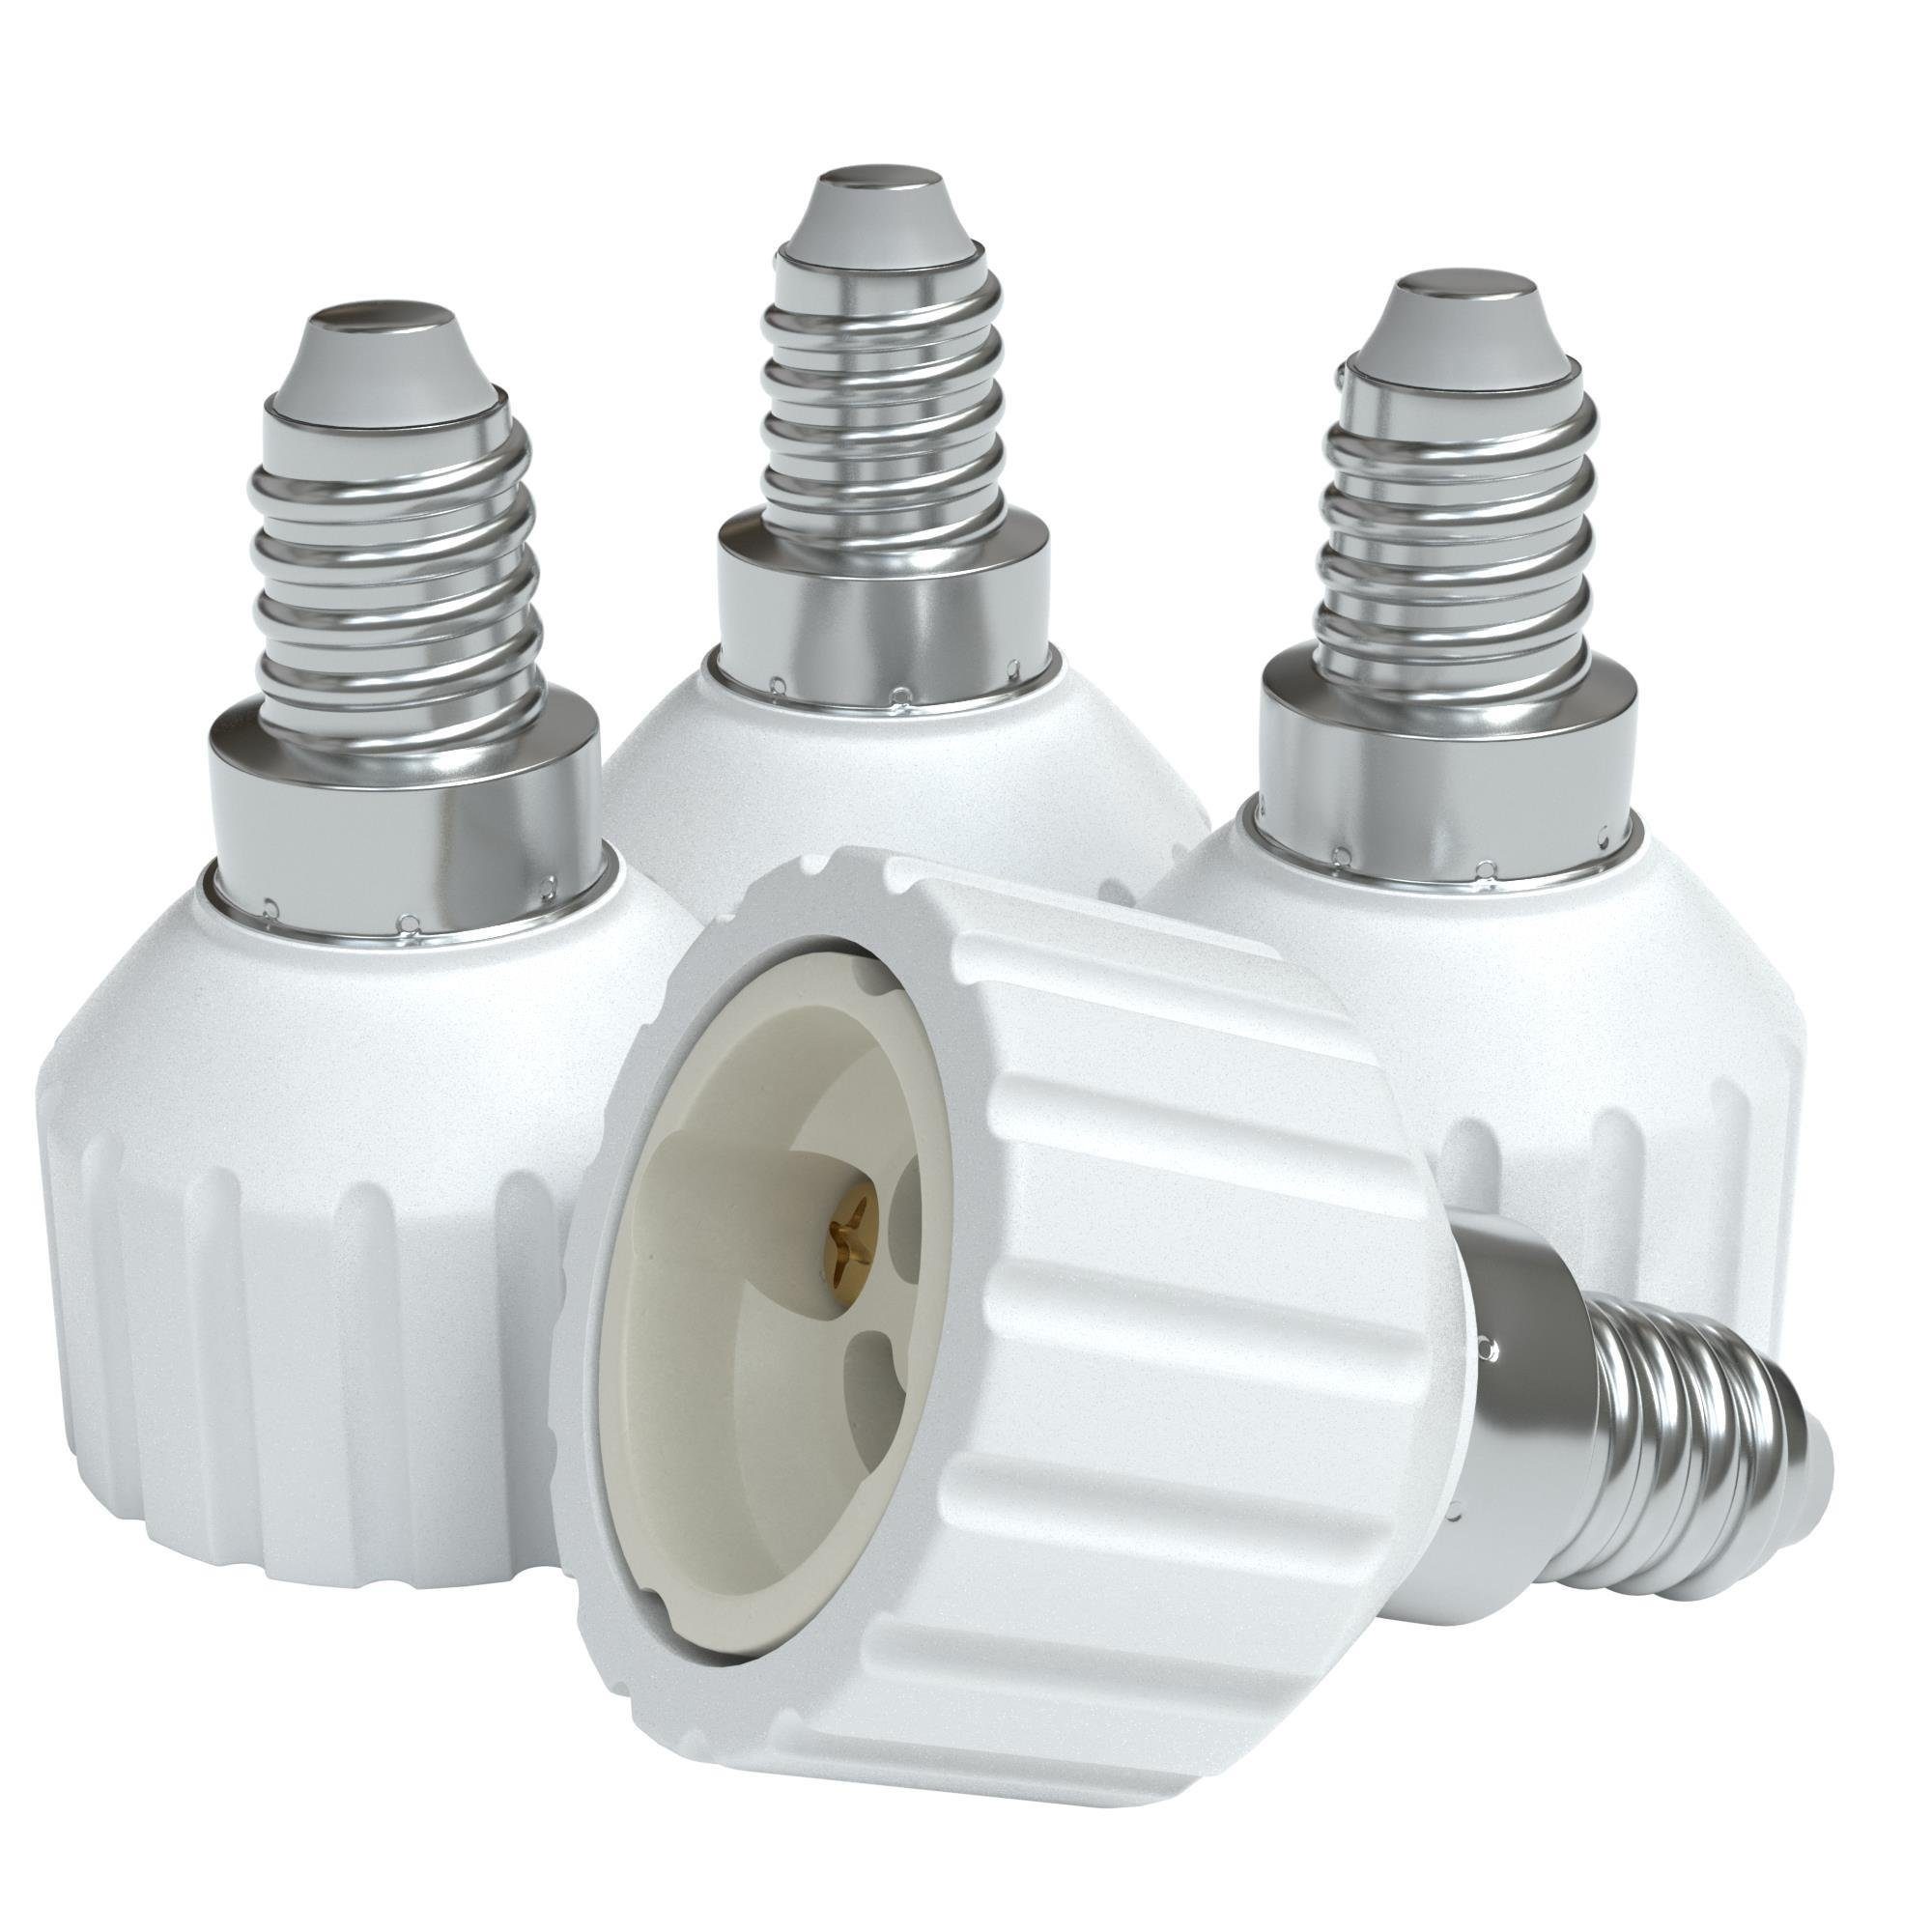 https://i.otto.de/i/otto/14273111-25bd-59b0-9f53-c1e475d67eb7/eazy-case-lampenfassung-lampensockel-sets-e14-auf-gu10-adapter-fassung-lampe-stecker-gluehbirne-spar-set-4-st-lampenadapter-e14-zu-gu10-adapter-lampen-led-halogen-energiesparlampen.jpg?$formatz$